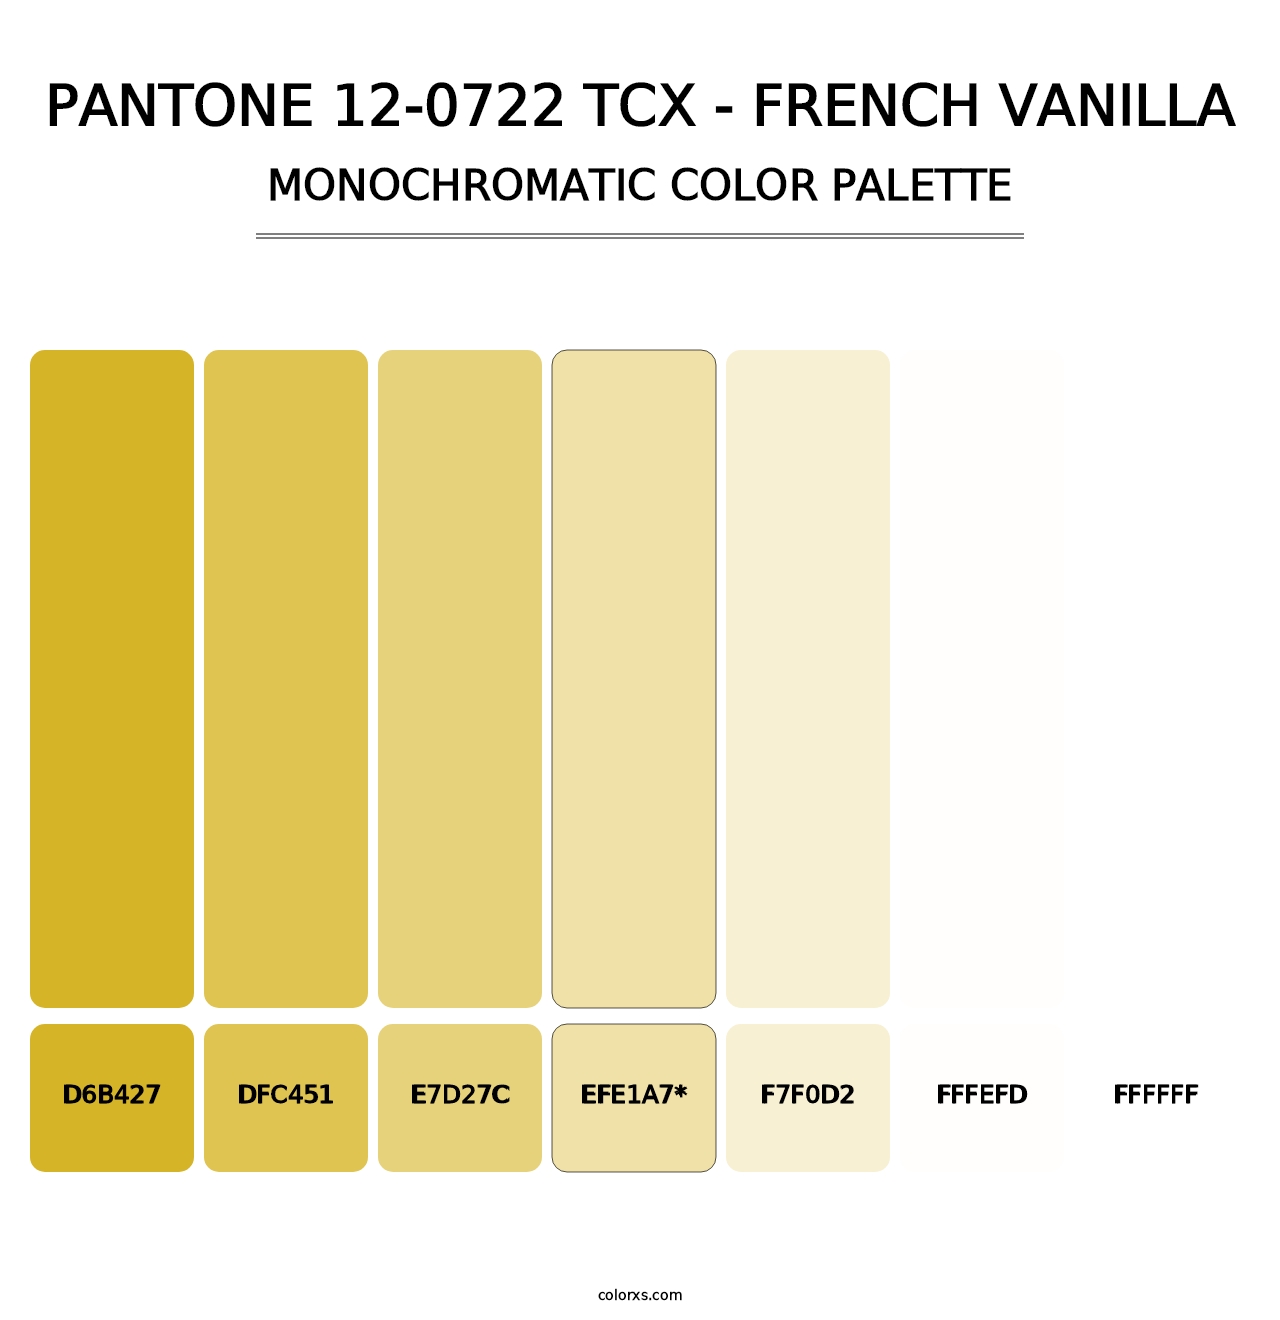 PANTONE 12-0722 TCX - French Vanilla - Monochromatic Color Palette